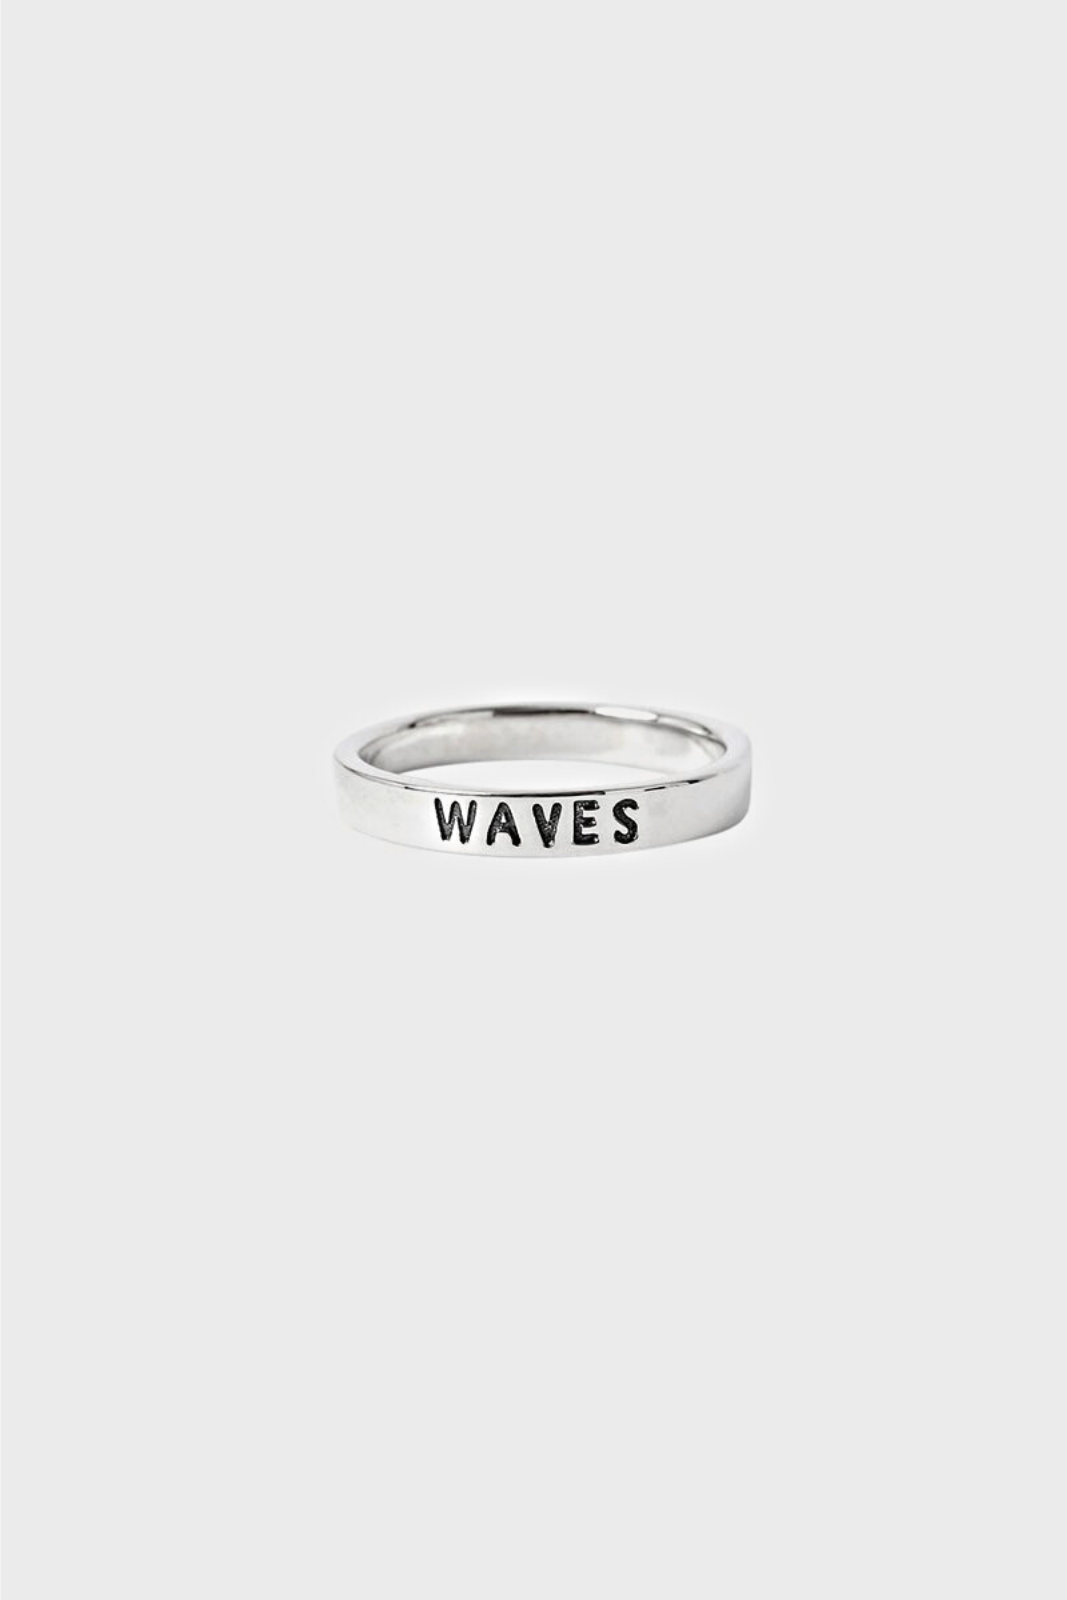 Waves Ring